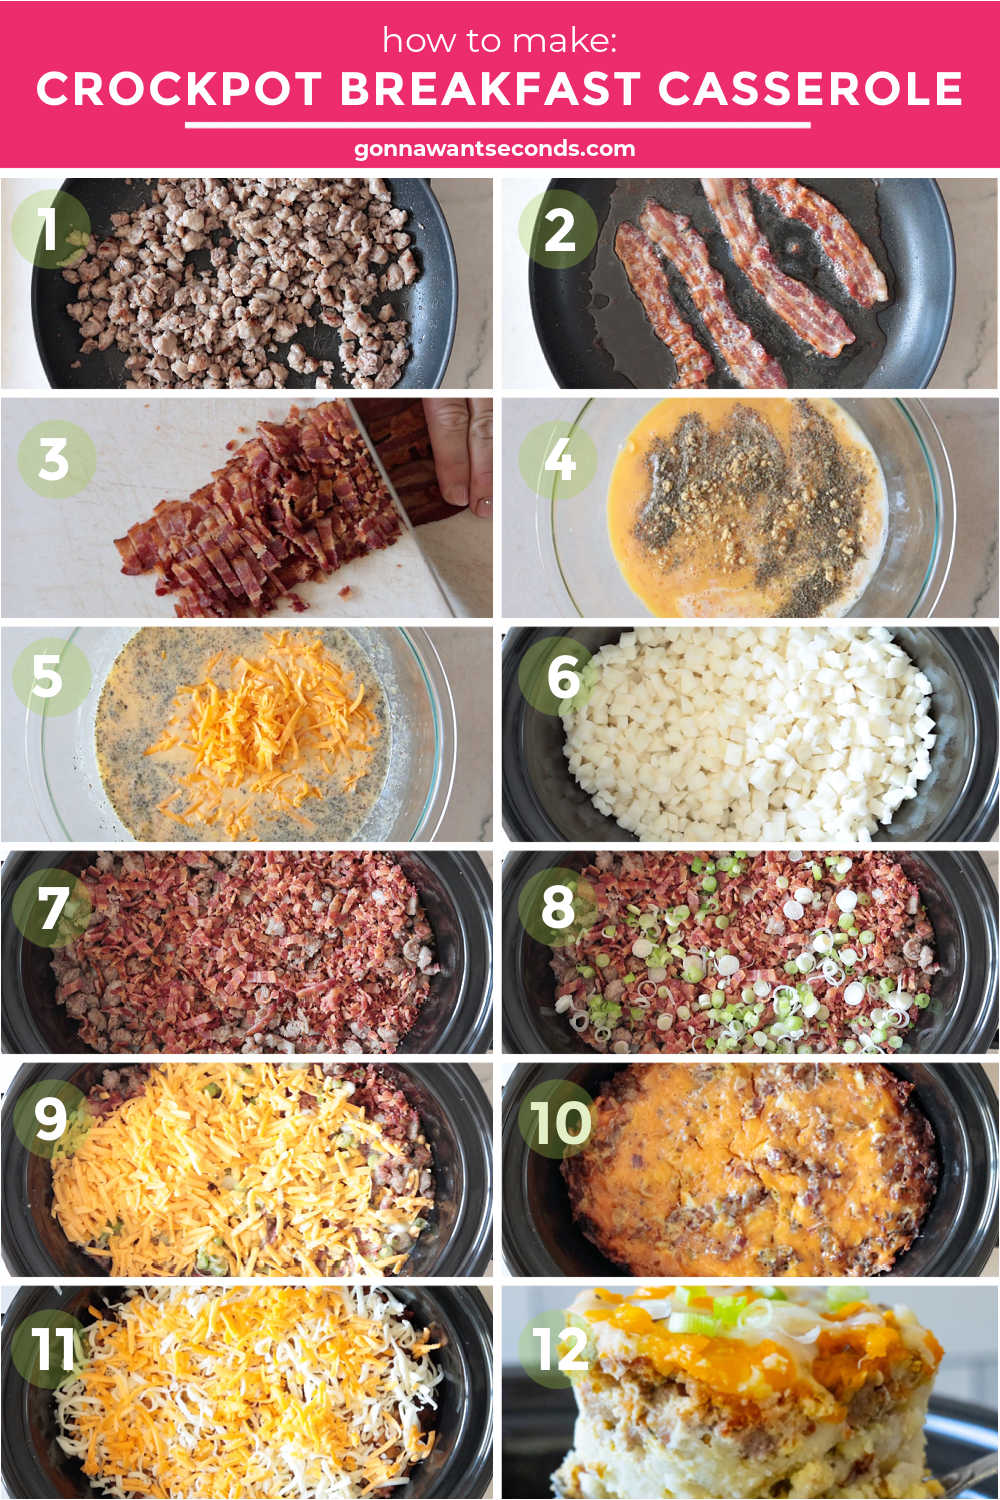 Step by step how to make crockpot breakfast casserole